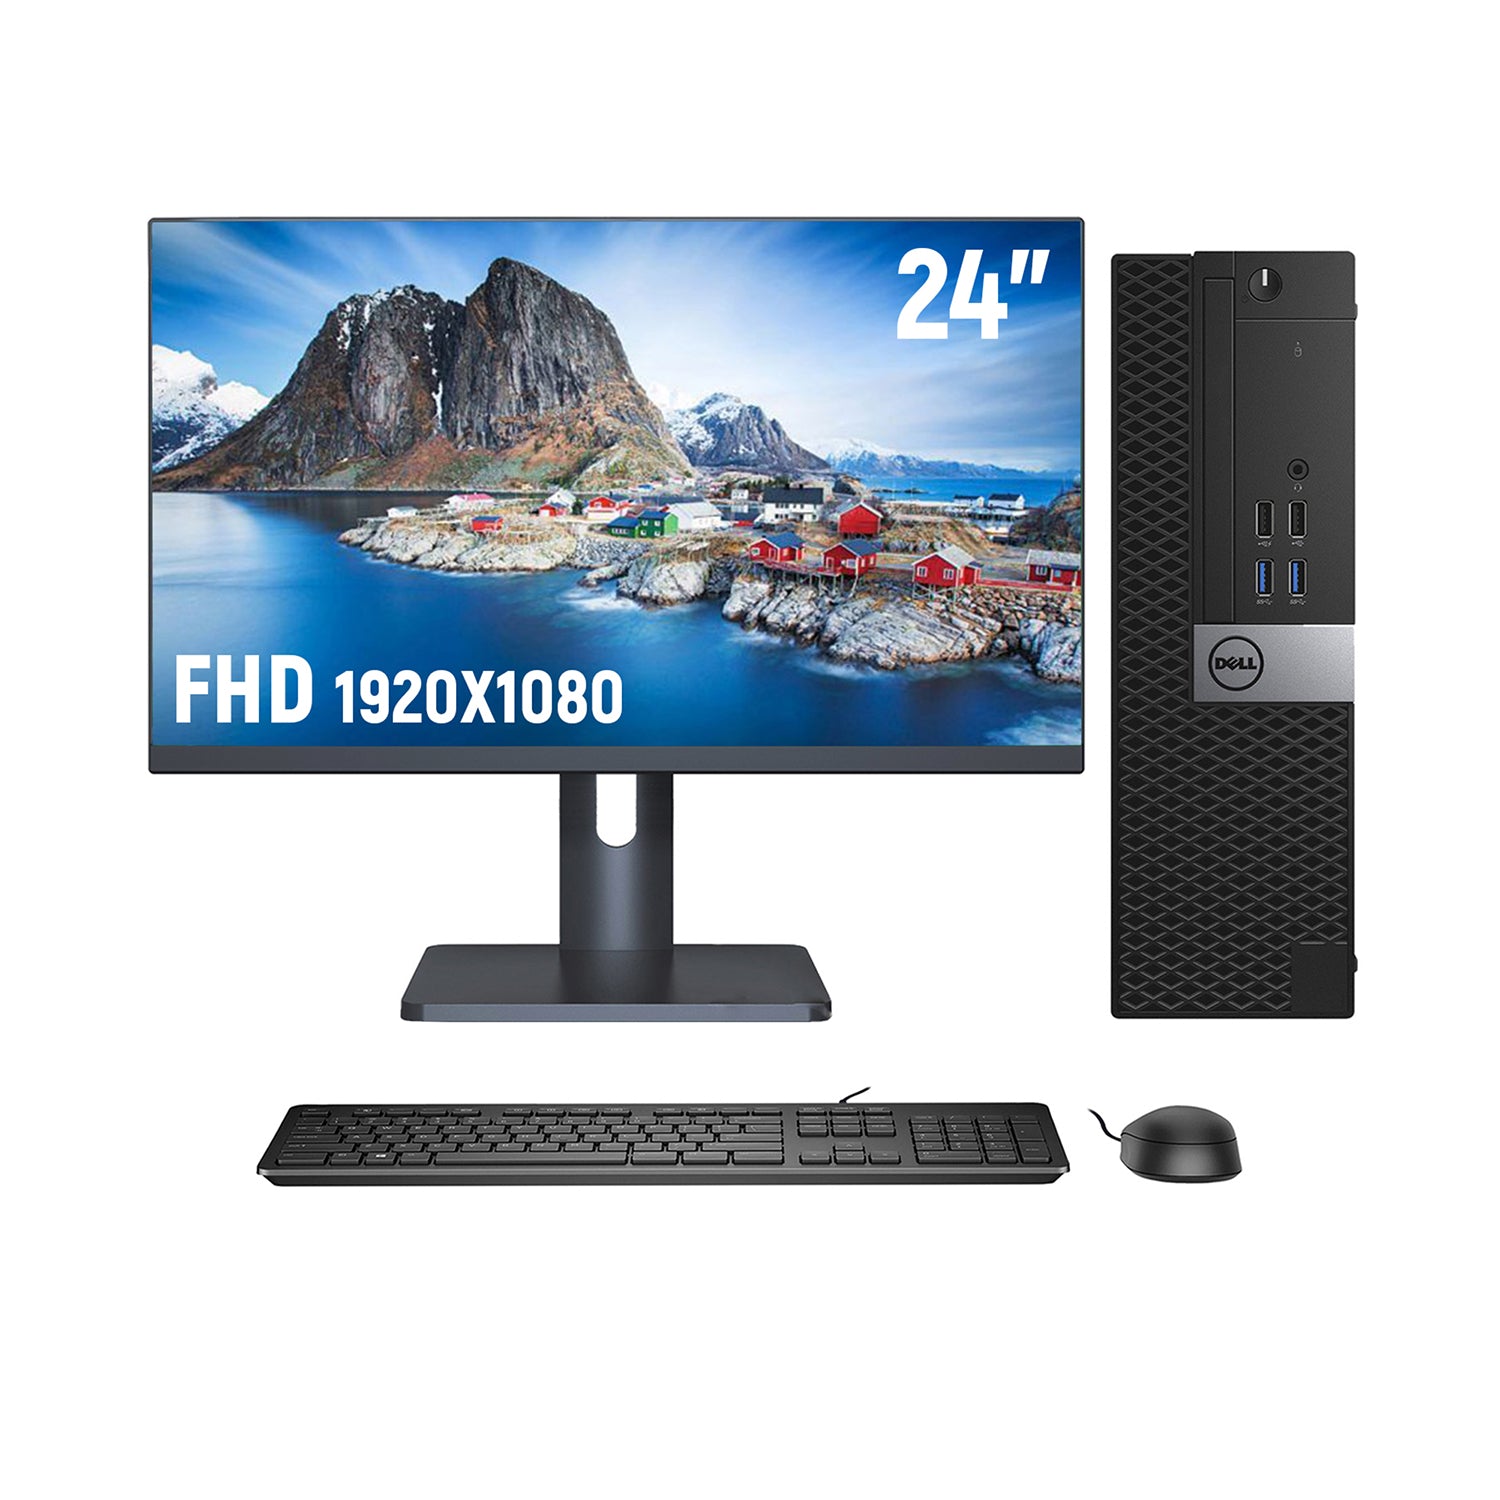 Desktop PC Dell OptiPlex SFF Computer (Intel Core i7 up to 4.00 GHz Processor| 16GB - 32GB DDR4 RAM| 256GB -2TB SSD| Windows 10 Pro| New 24 inch FHD Monitor| HDMI| WIFI) - Refurbished